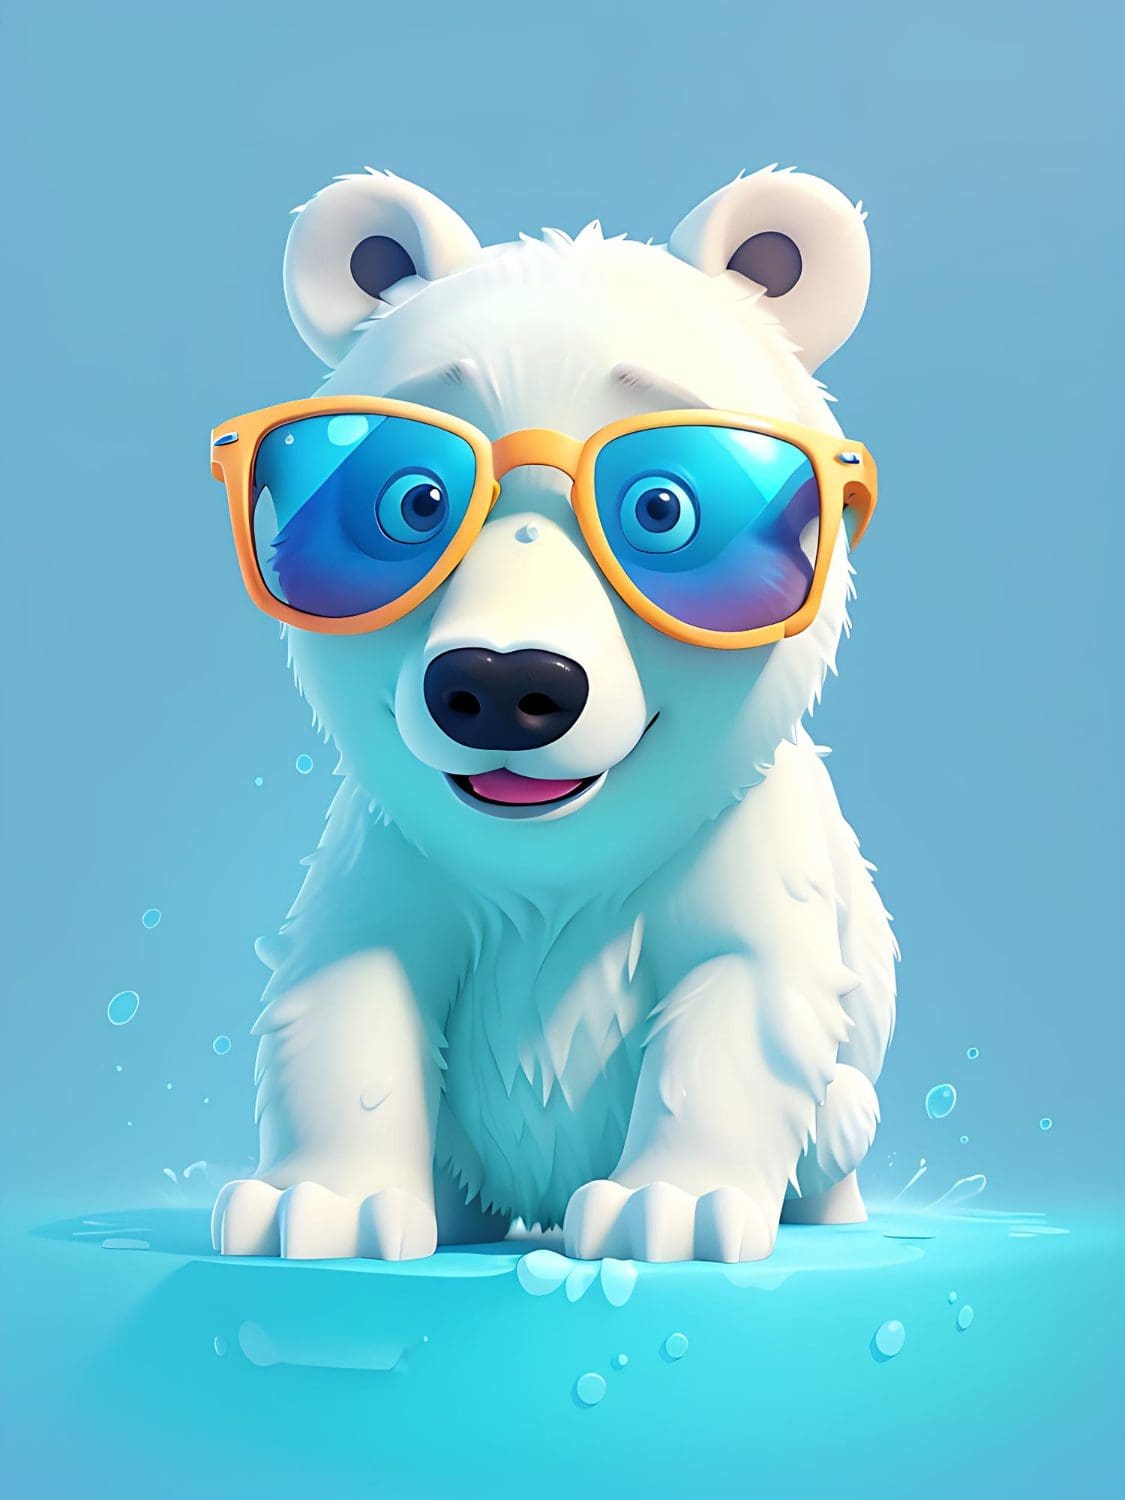 Cartoon graphic of a polar bear wearing sunglasses.